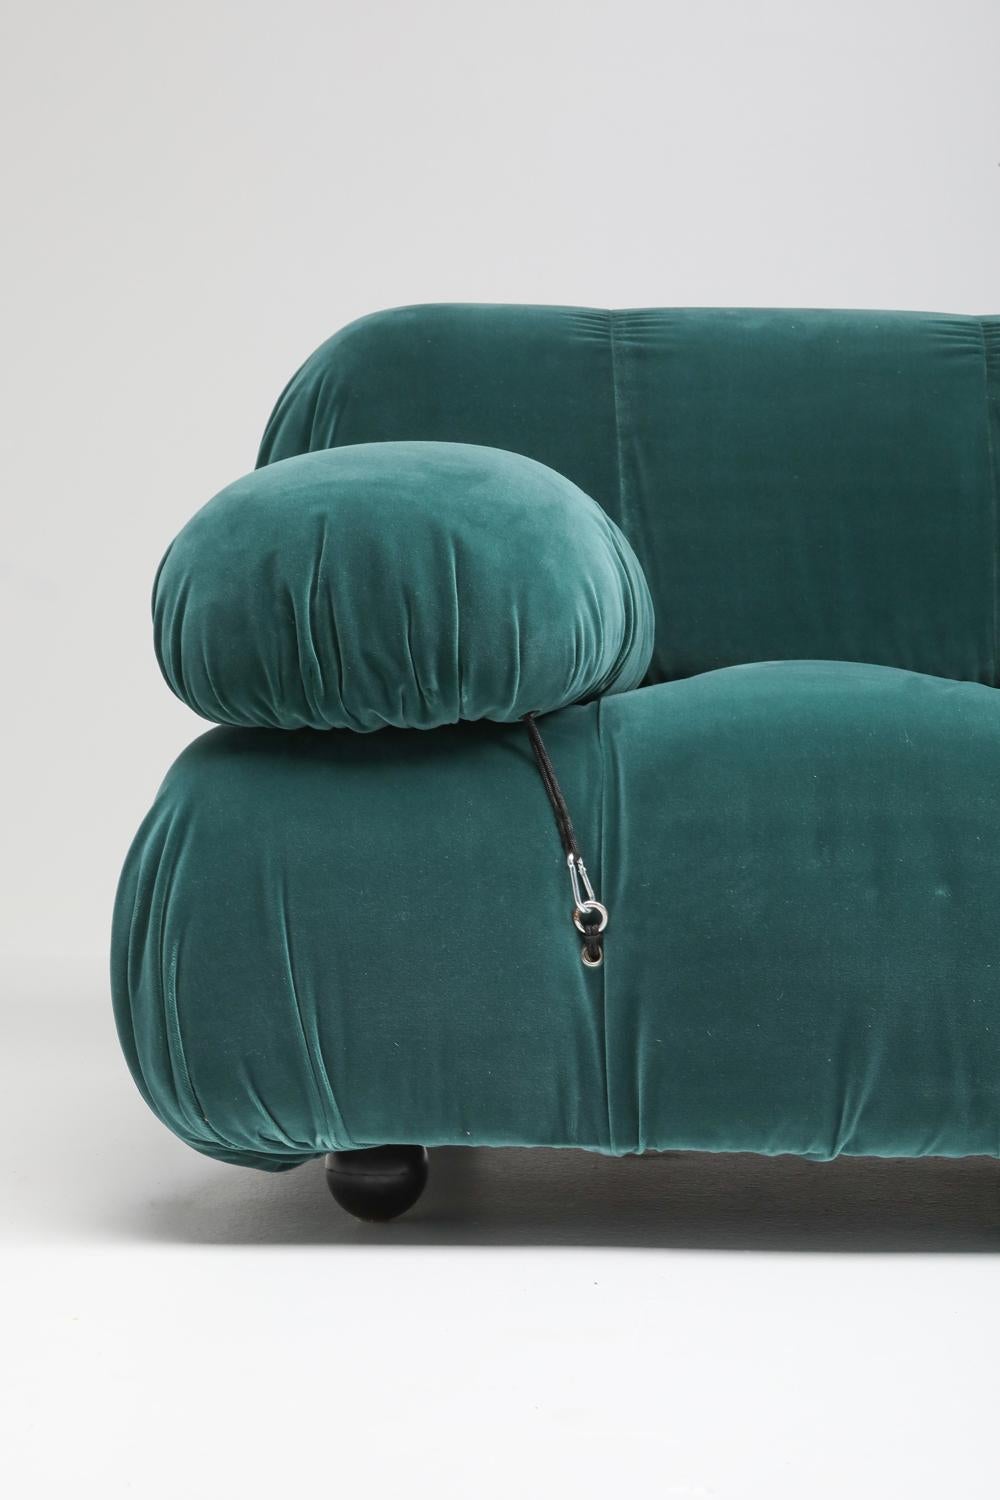 20th Century Mario Bellini's Camaleonda sectional sofa